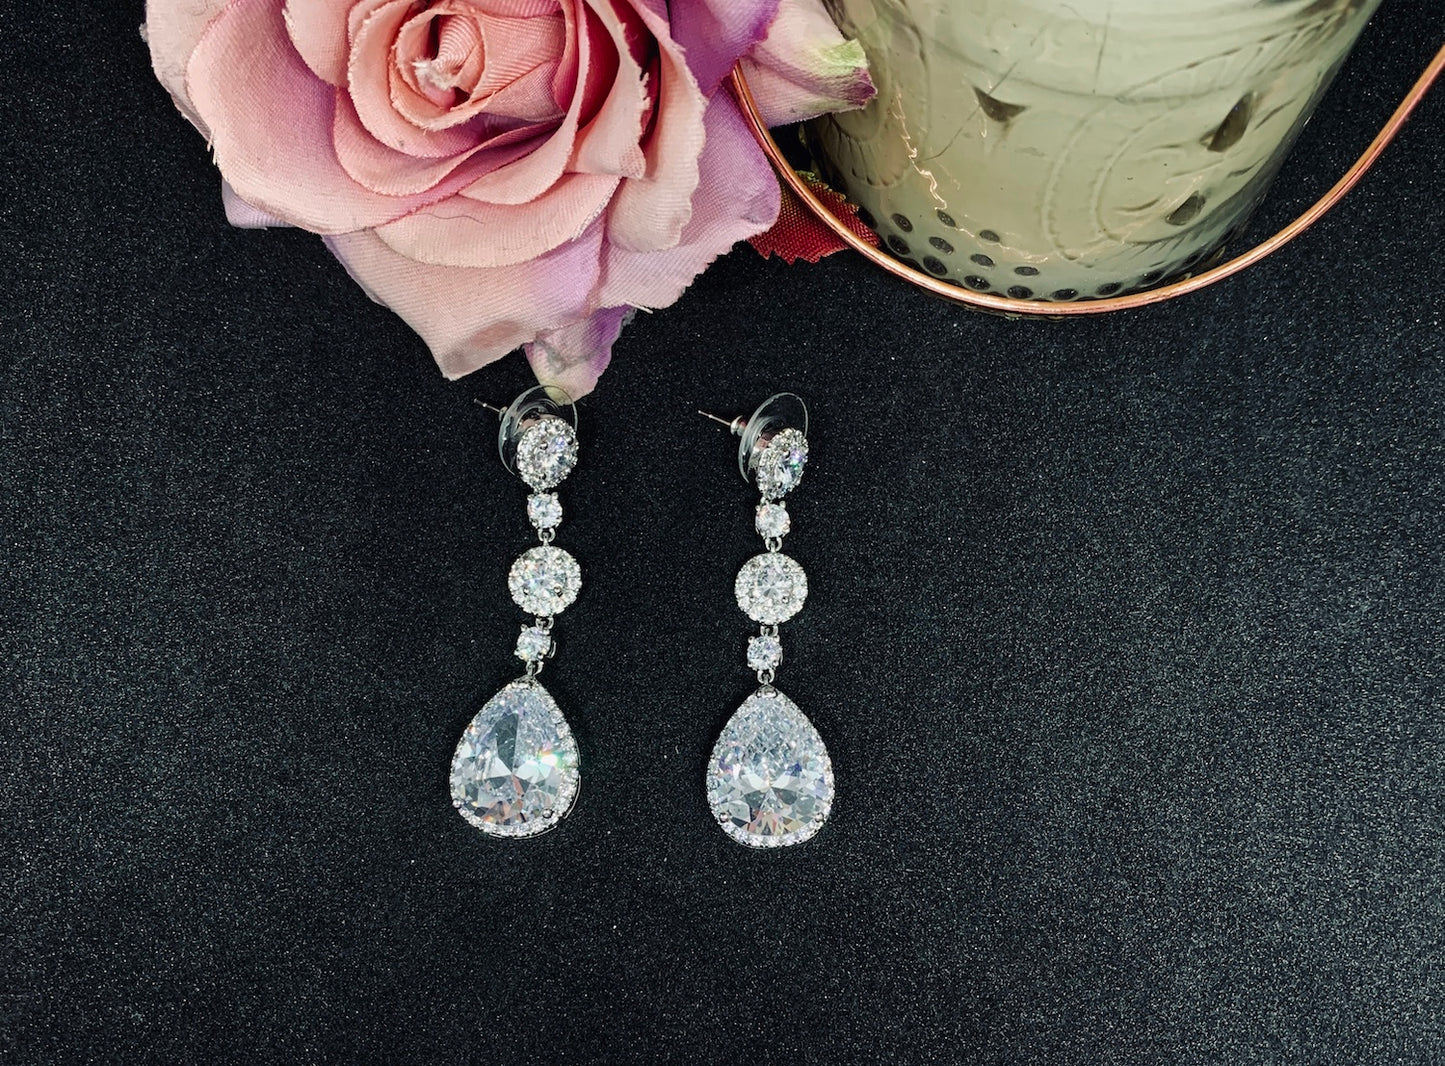 Wedding earrings, Bridal Jewellery, Statement earrings, Wedding earrings for bride